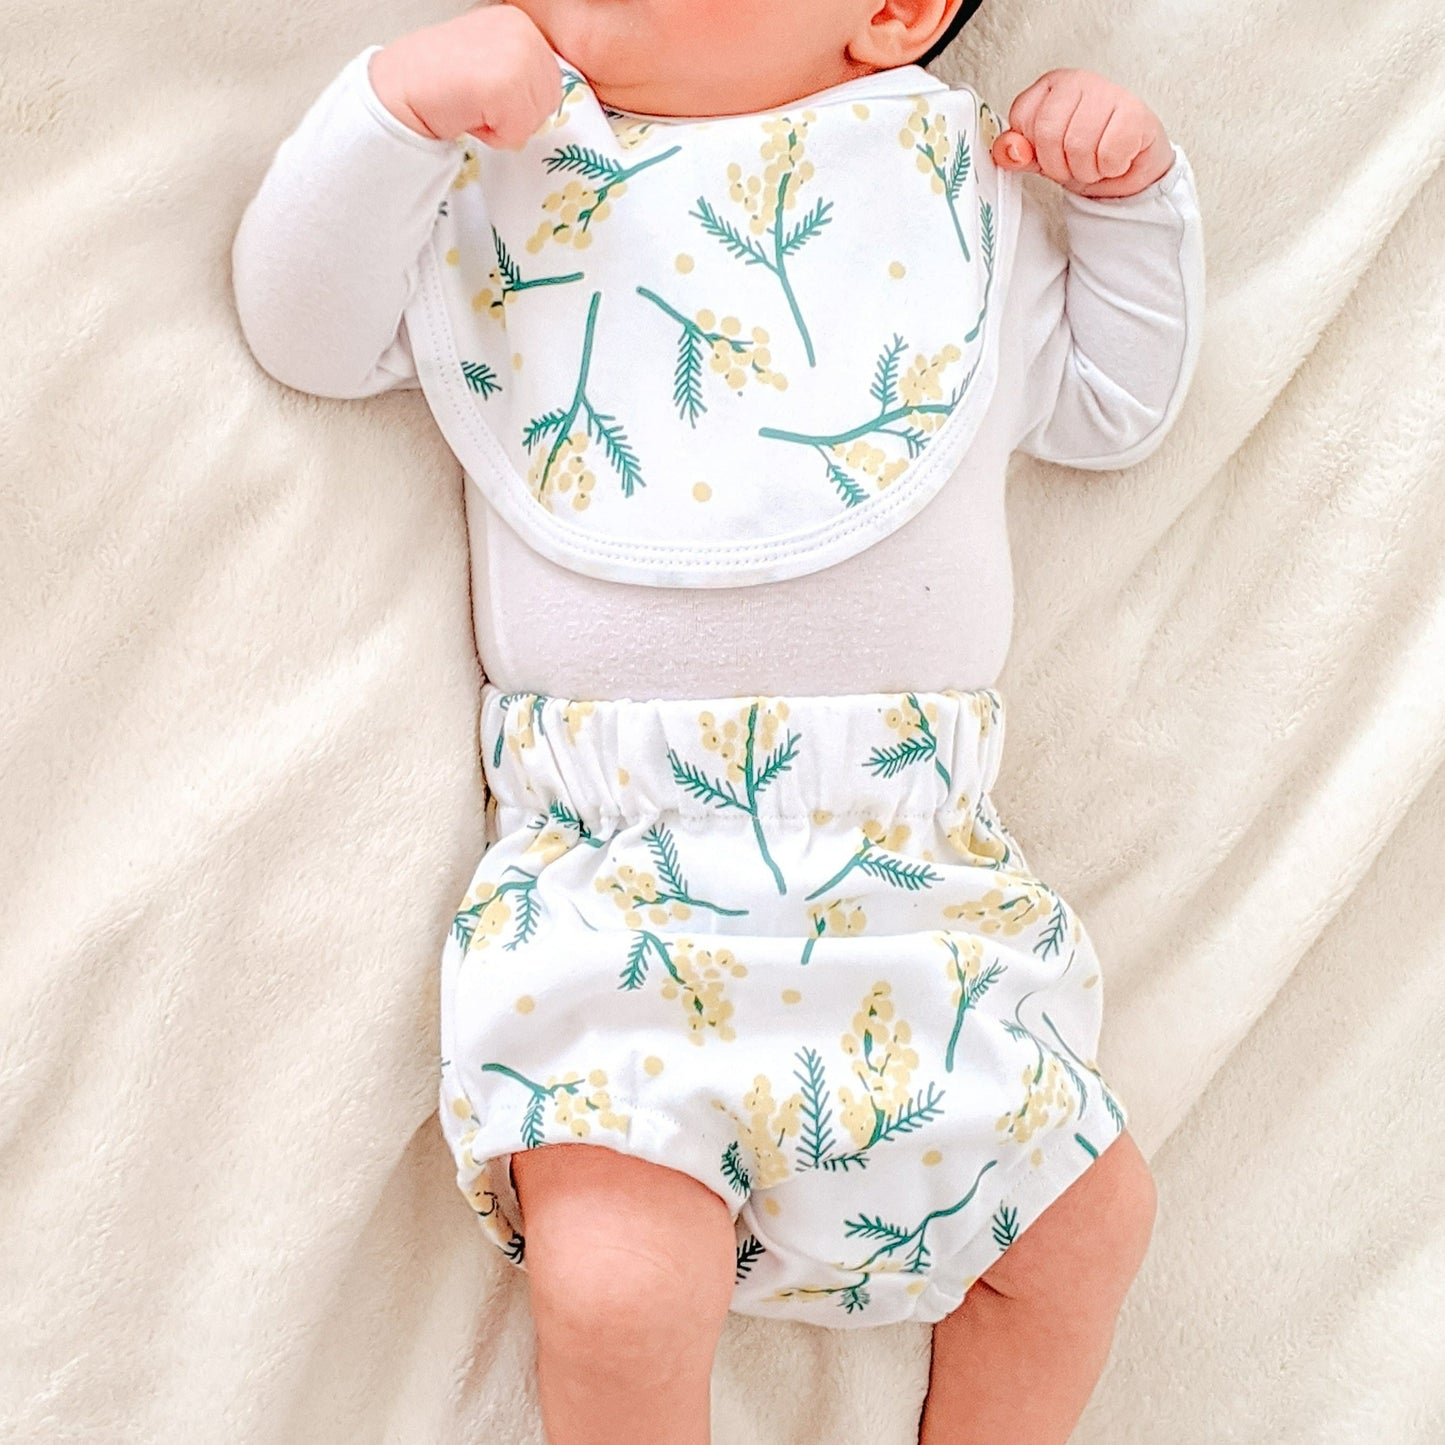 Australiana print baby clothes